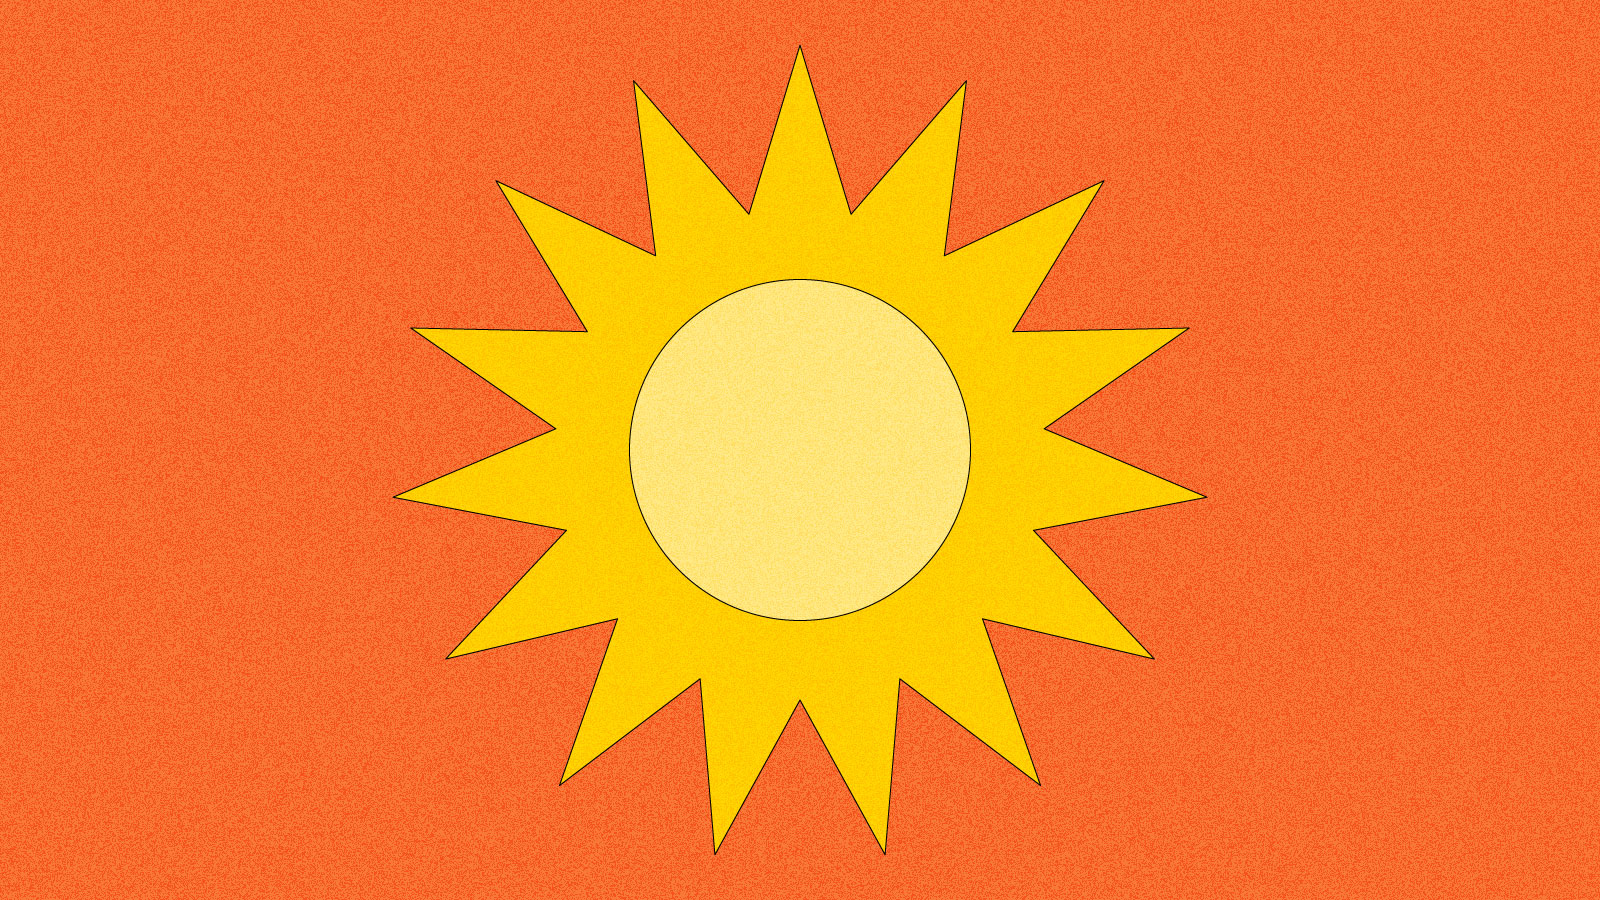 Illustration of yellow sun on orange background